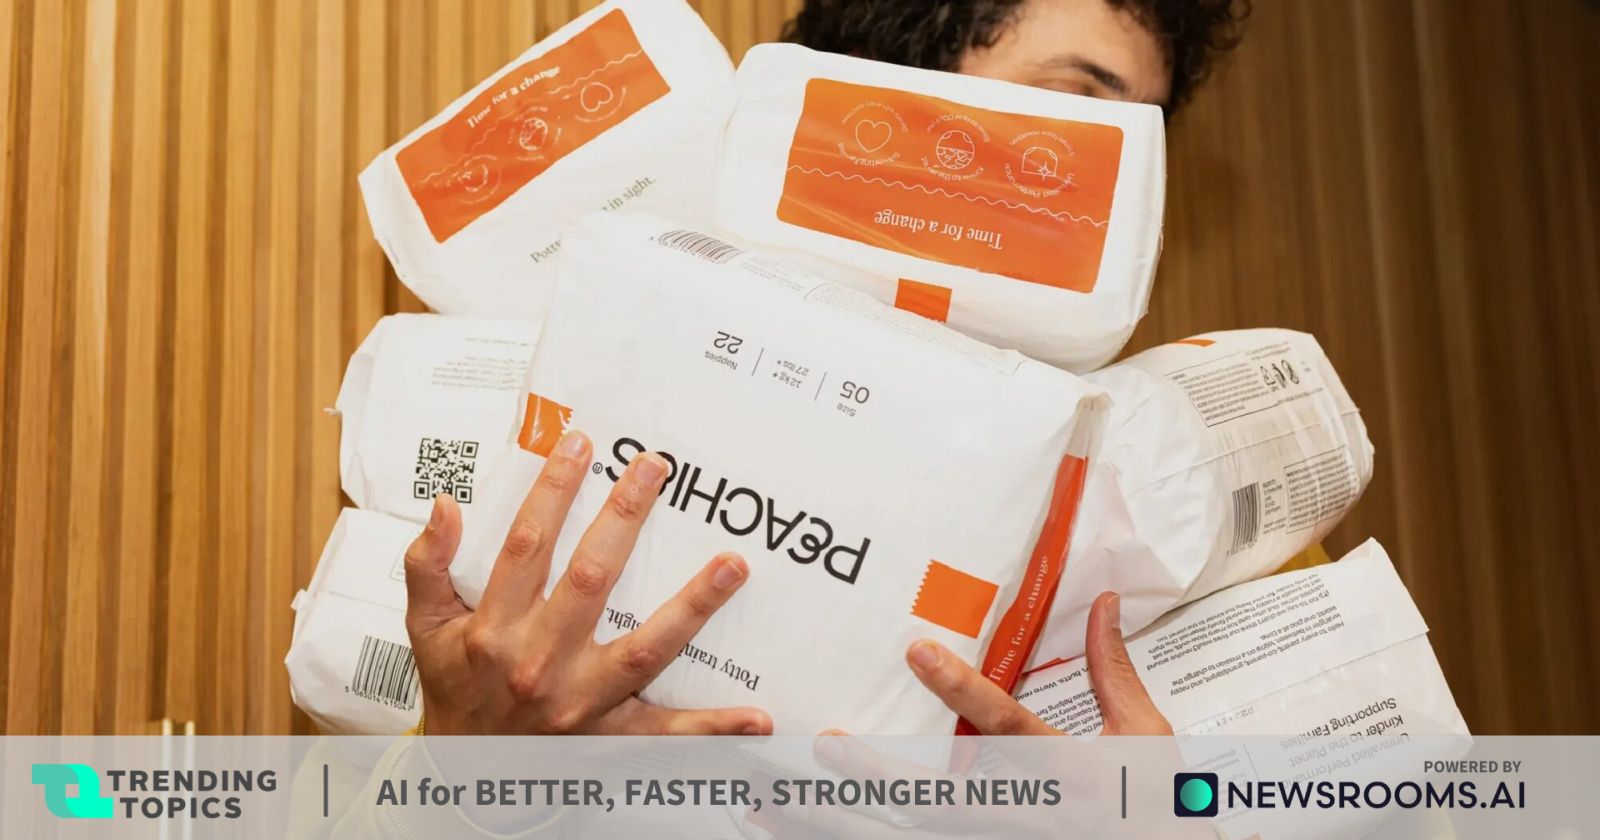 Diaper startup with Austrian founder receives 1.6 million euros